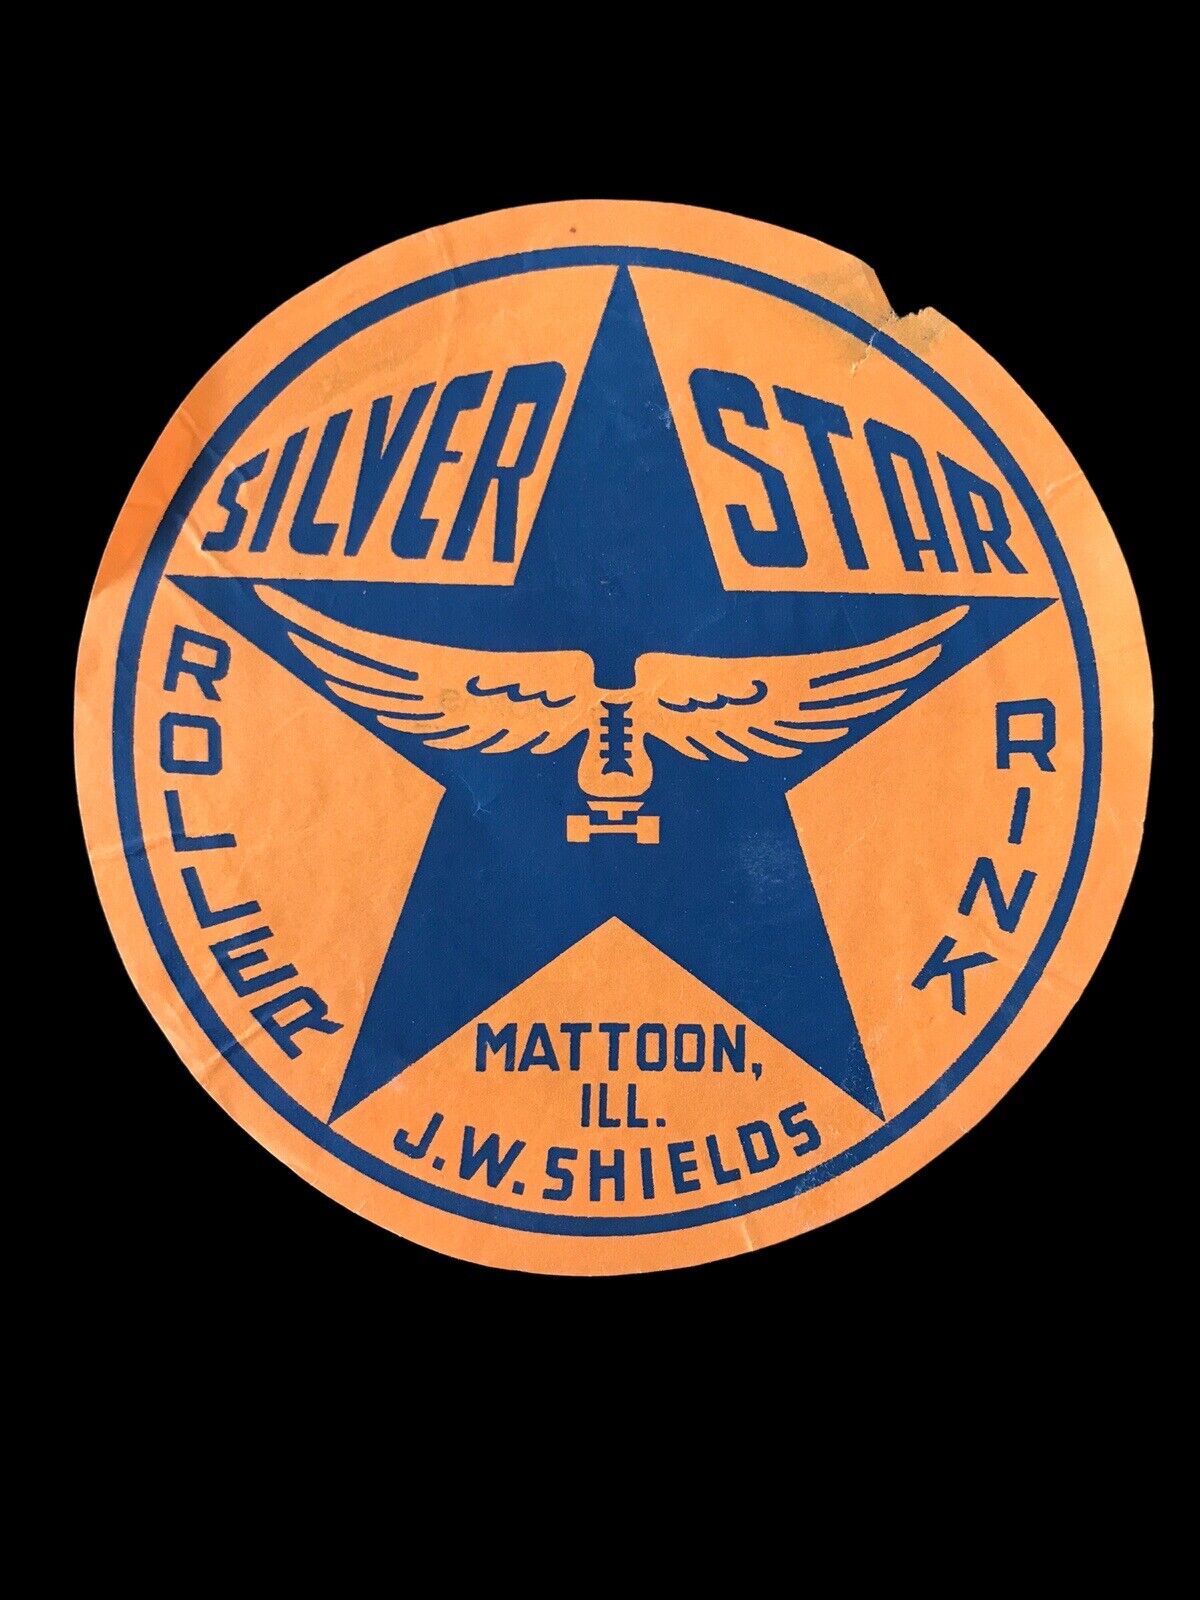 1930\'s-50\'s Silver Star Roller Rink Mattoon ILL. Skating Label G.W. Shields